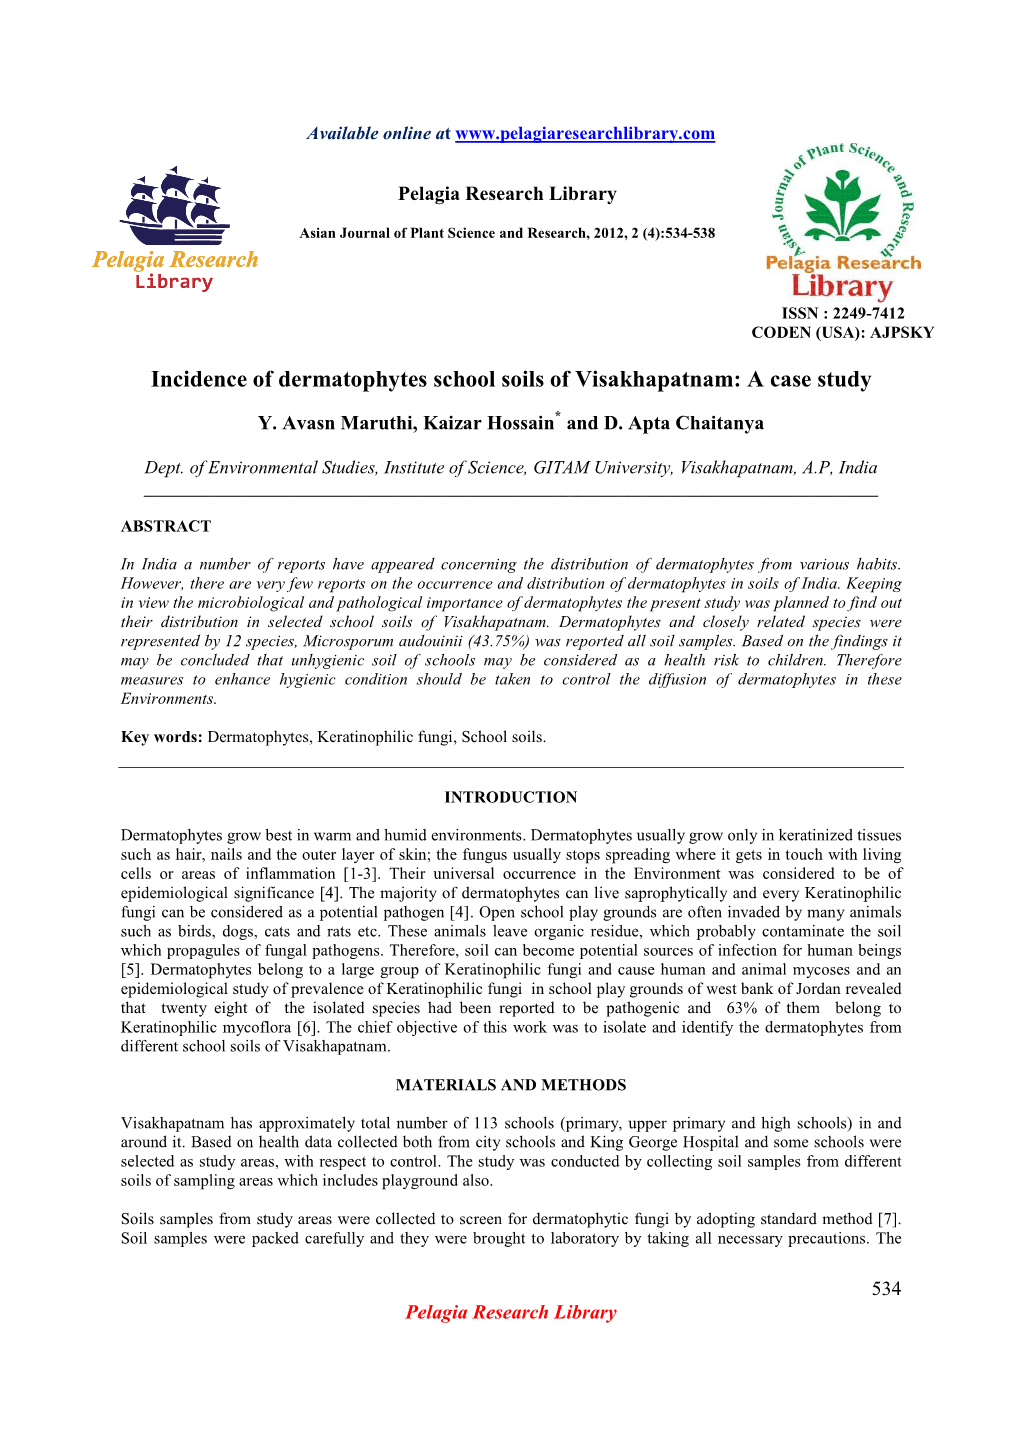 Incidence of Dermatophytes School Soils of Visakhapatnam: a Case Study